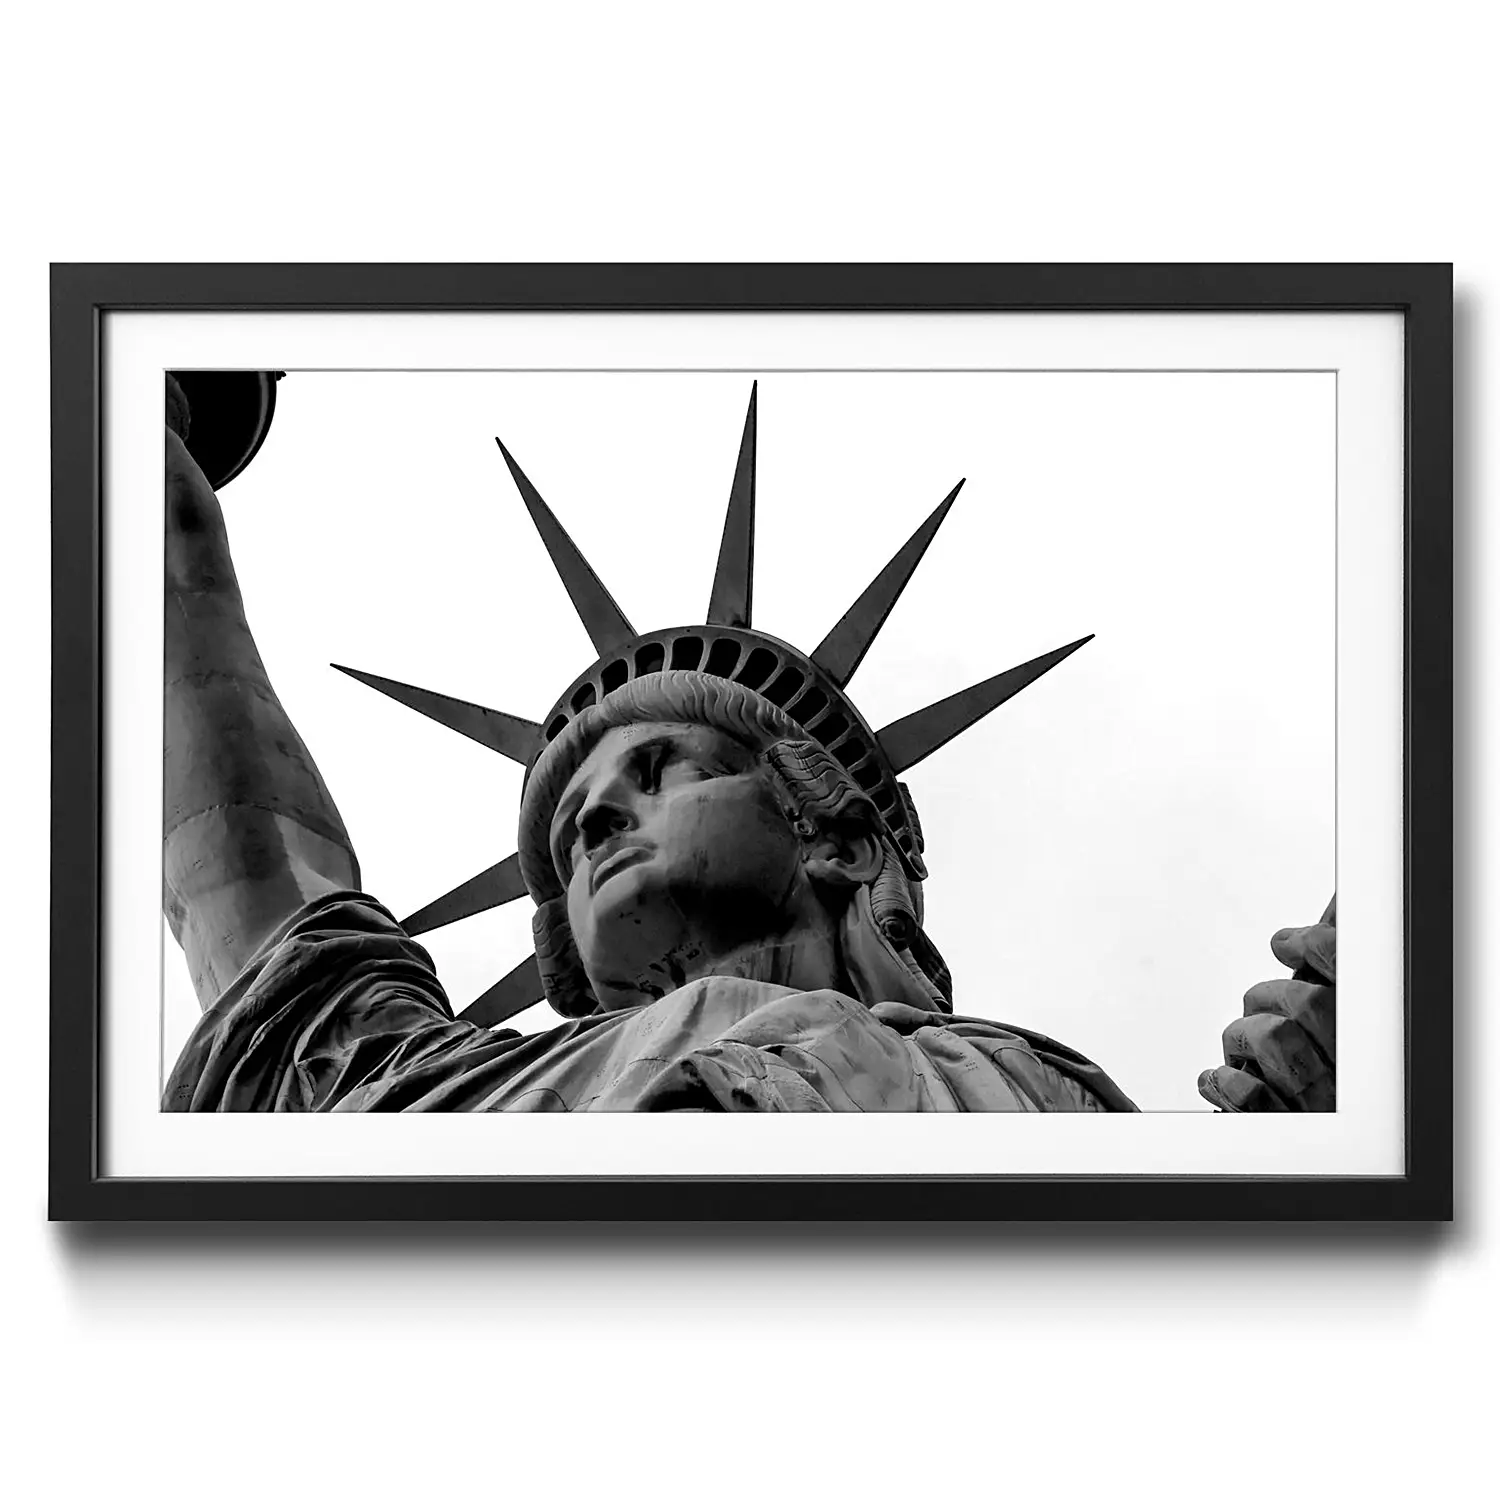 Gerahmtes Bild of Liberty Statue